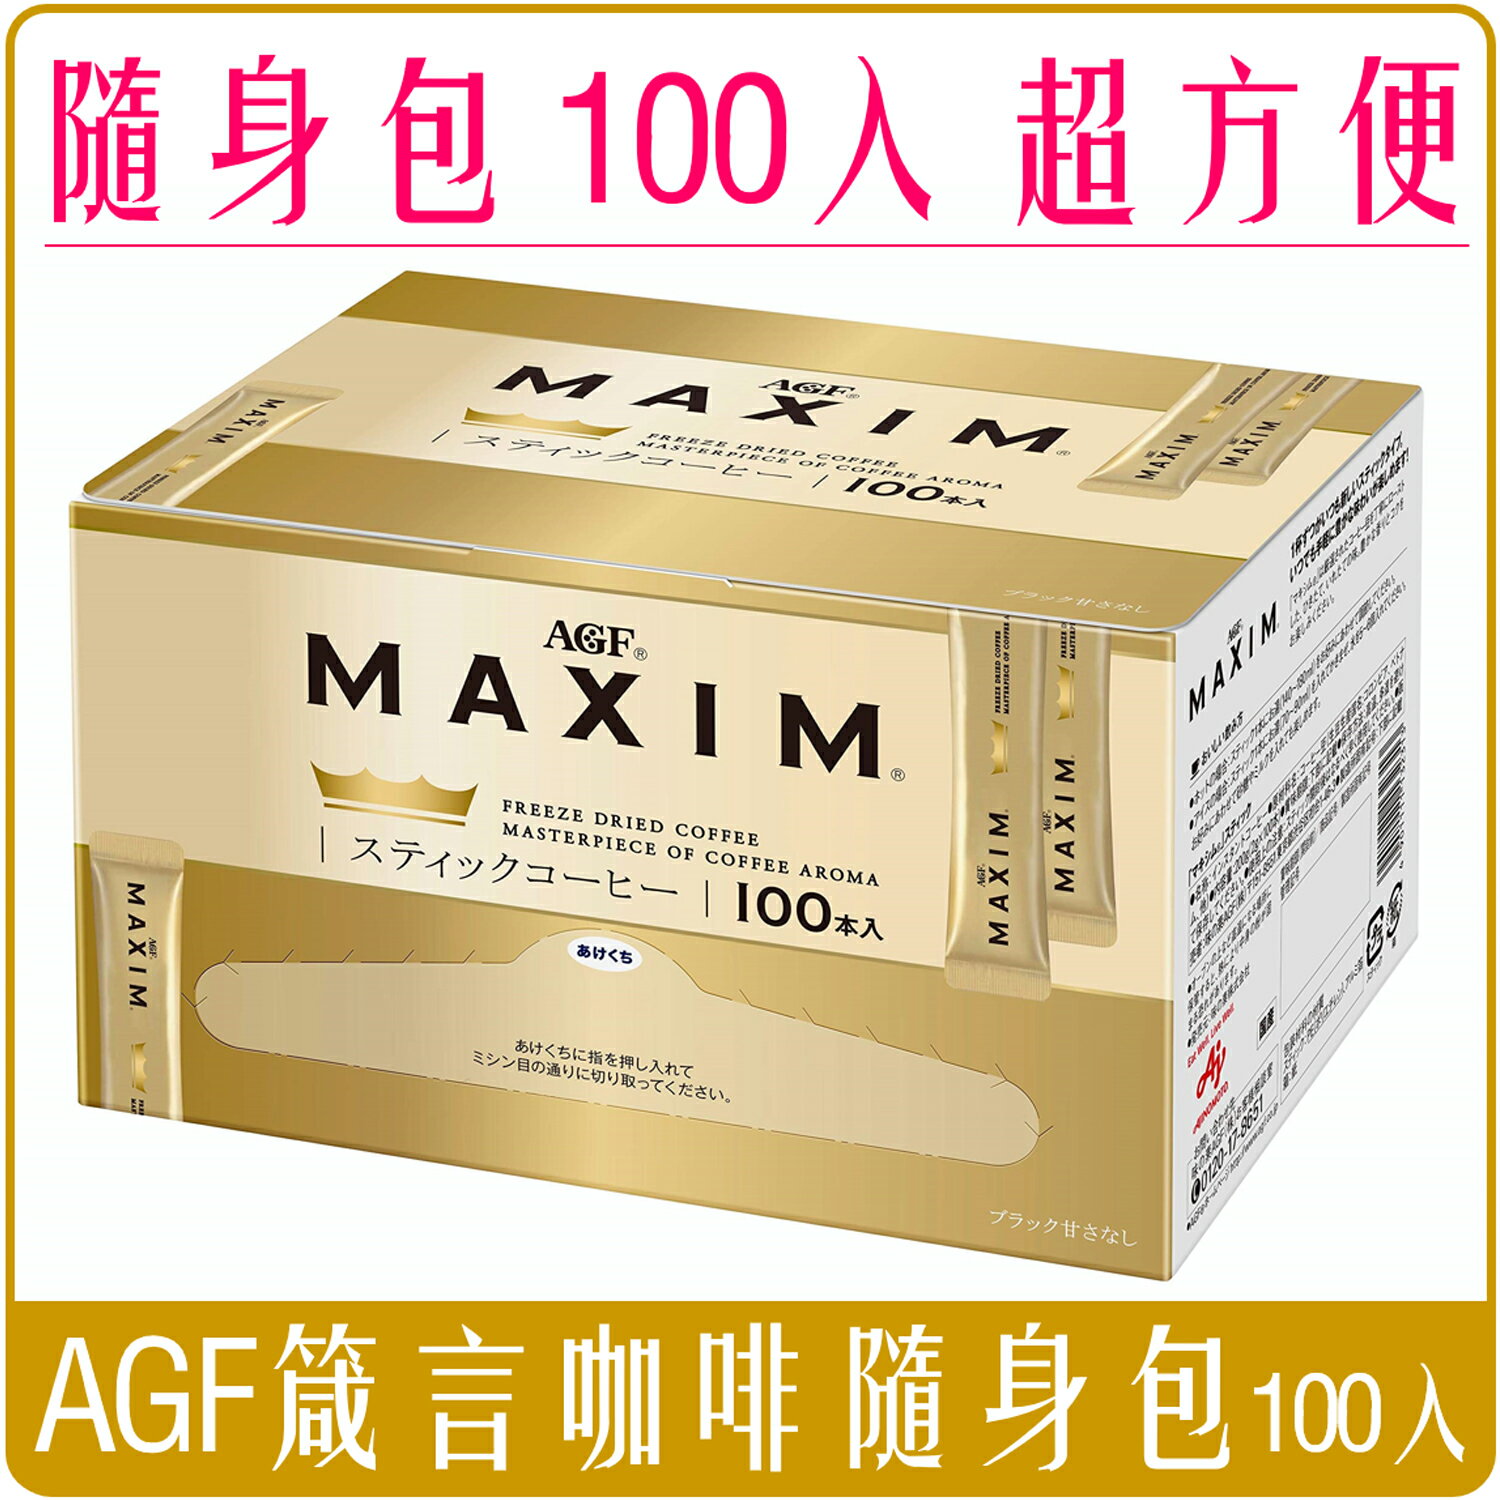 《 Chara 微百貨 》 日本 AGF 箴言 咖啡 隨身包 金條 單條 2g /100入 盒裝團購 批發